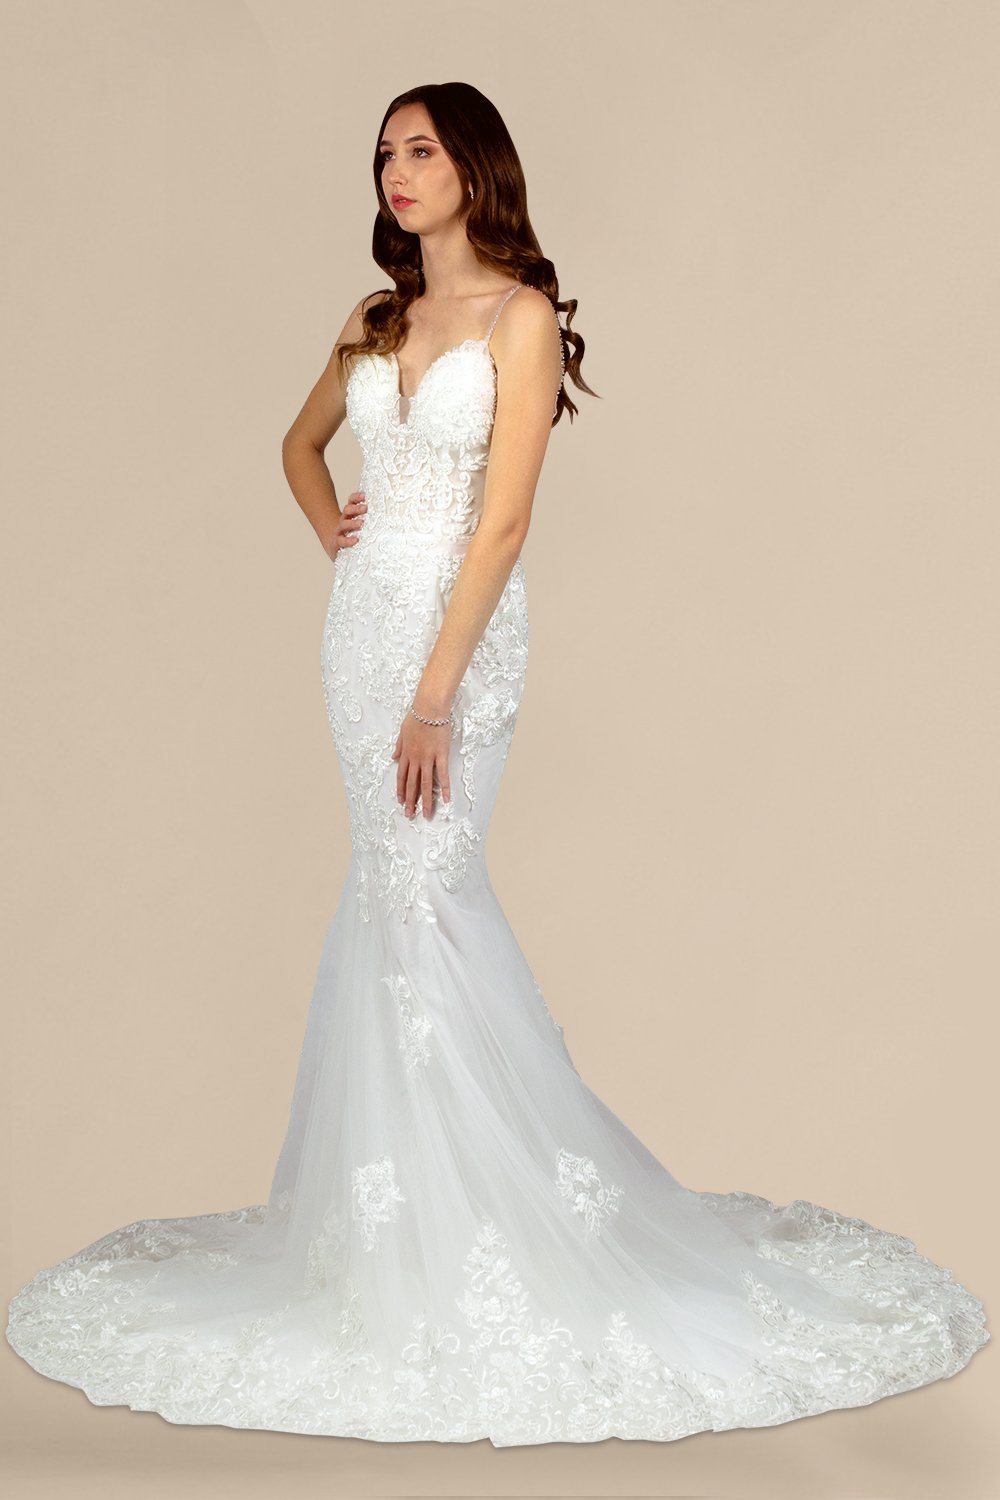 custom made mermaid wedding dresses petite brides perth australia online envious bridal & formal